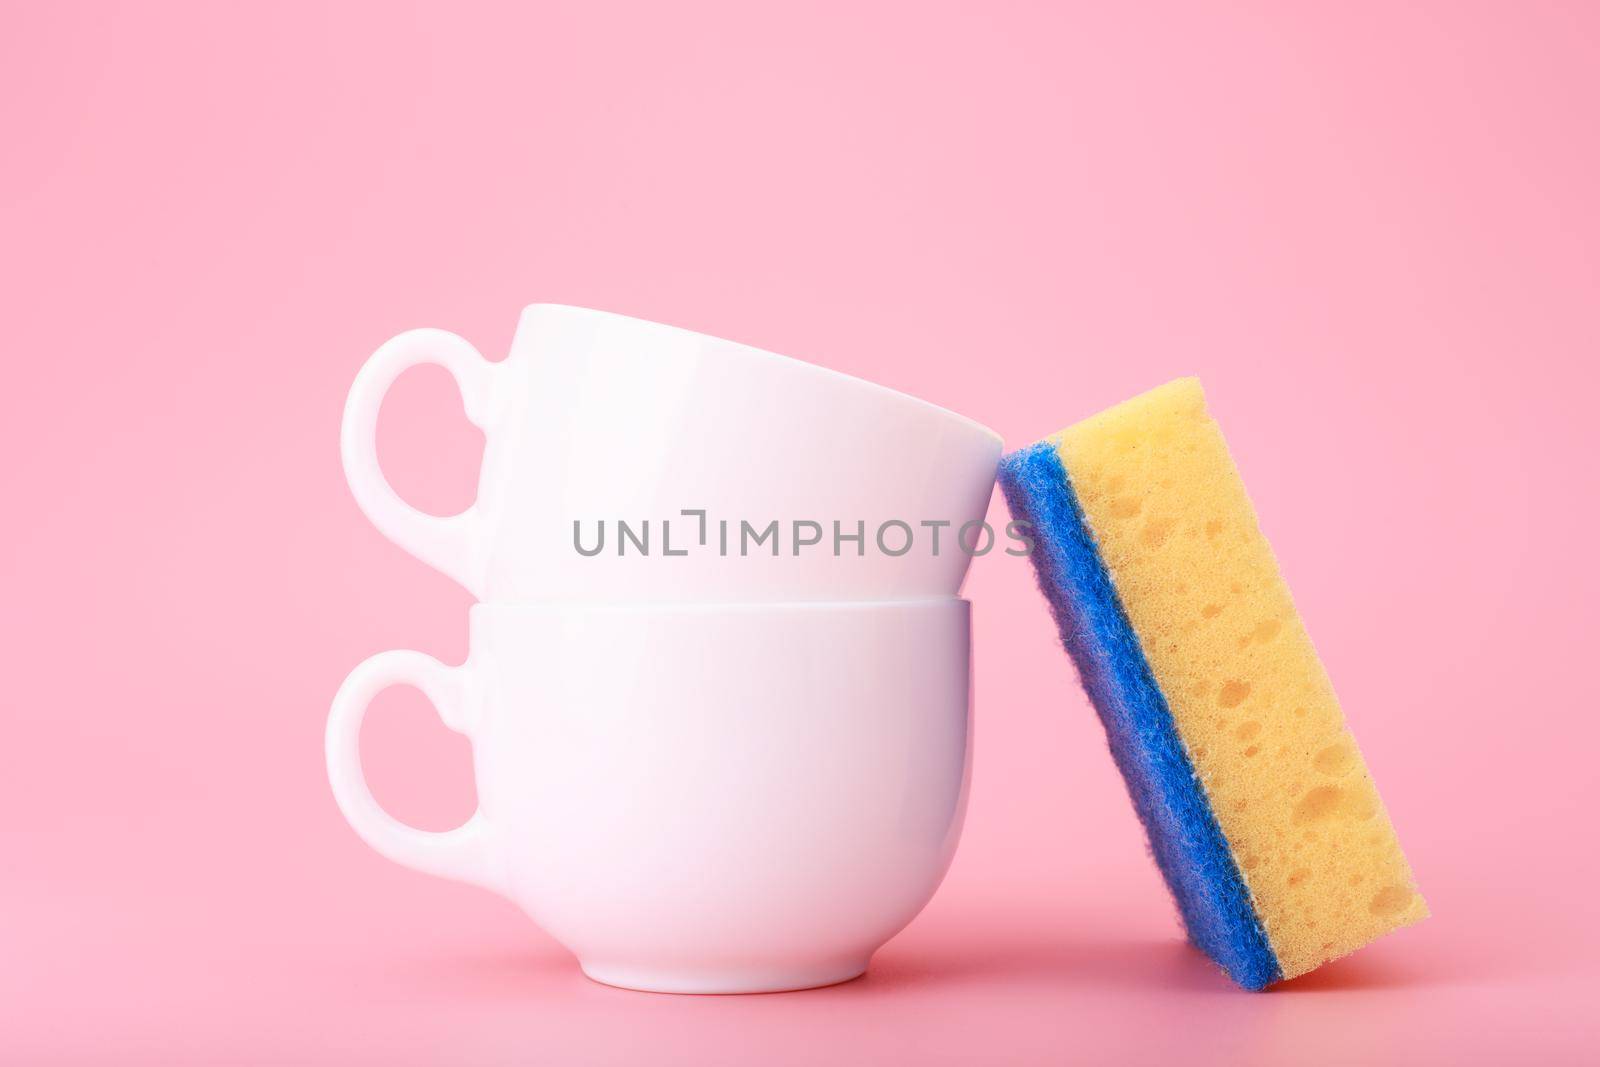 Creative, minimal dishwashing concept, yellow cleaning sponge next to two white ceramic cups on pink background by Senorina_Irina